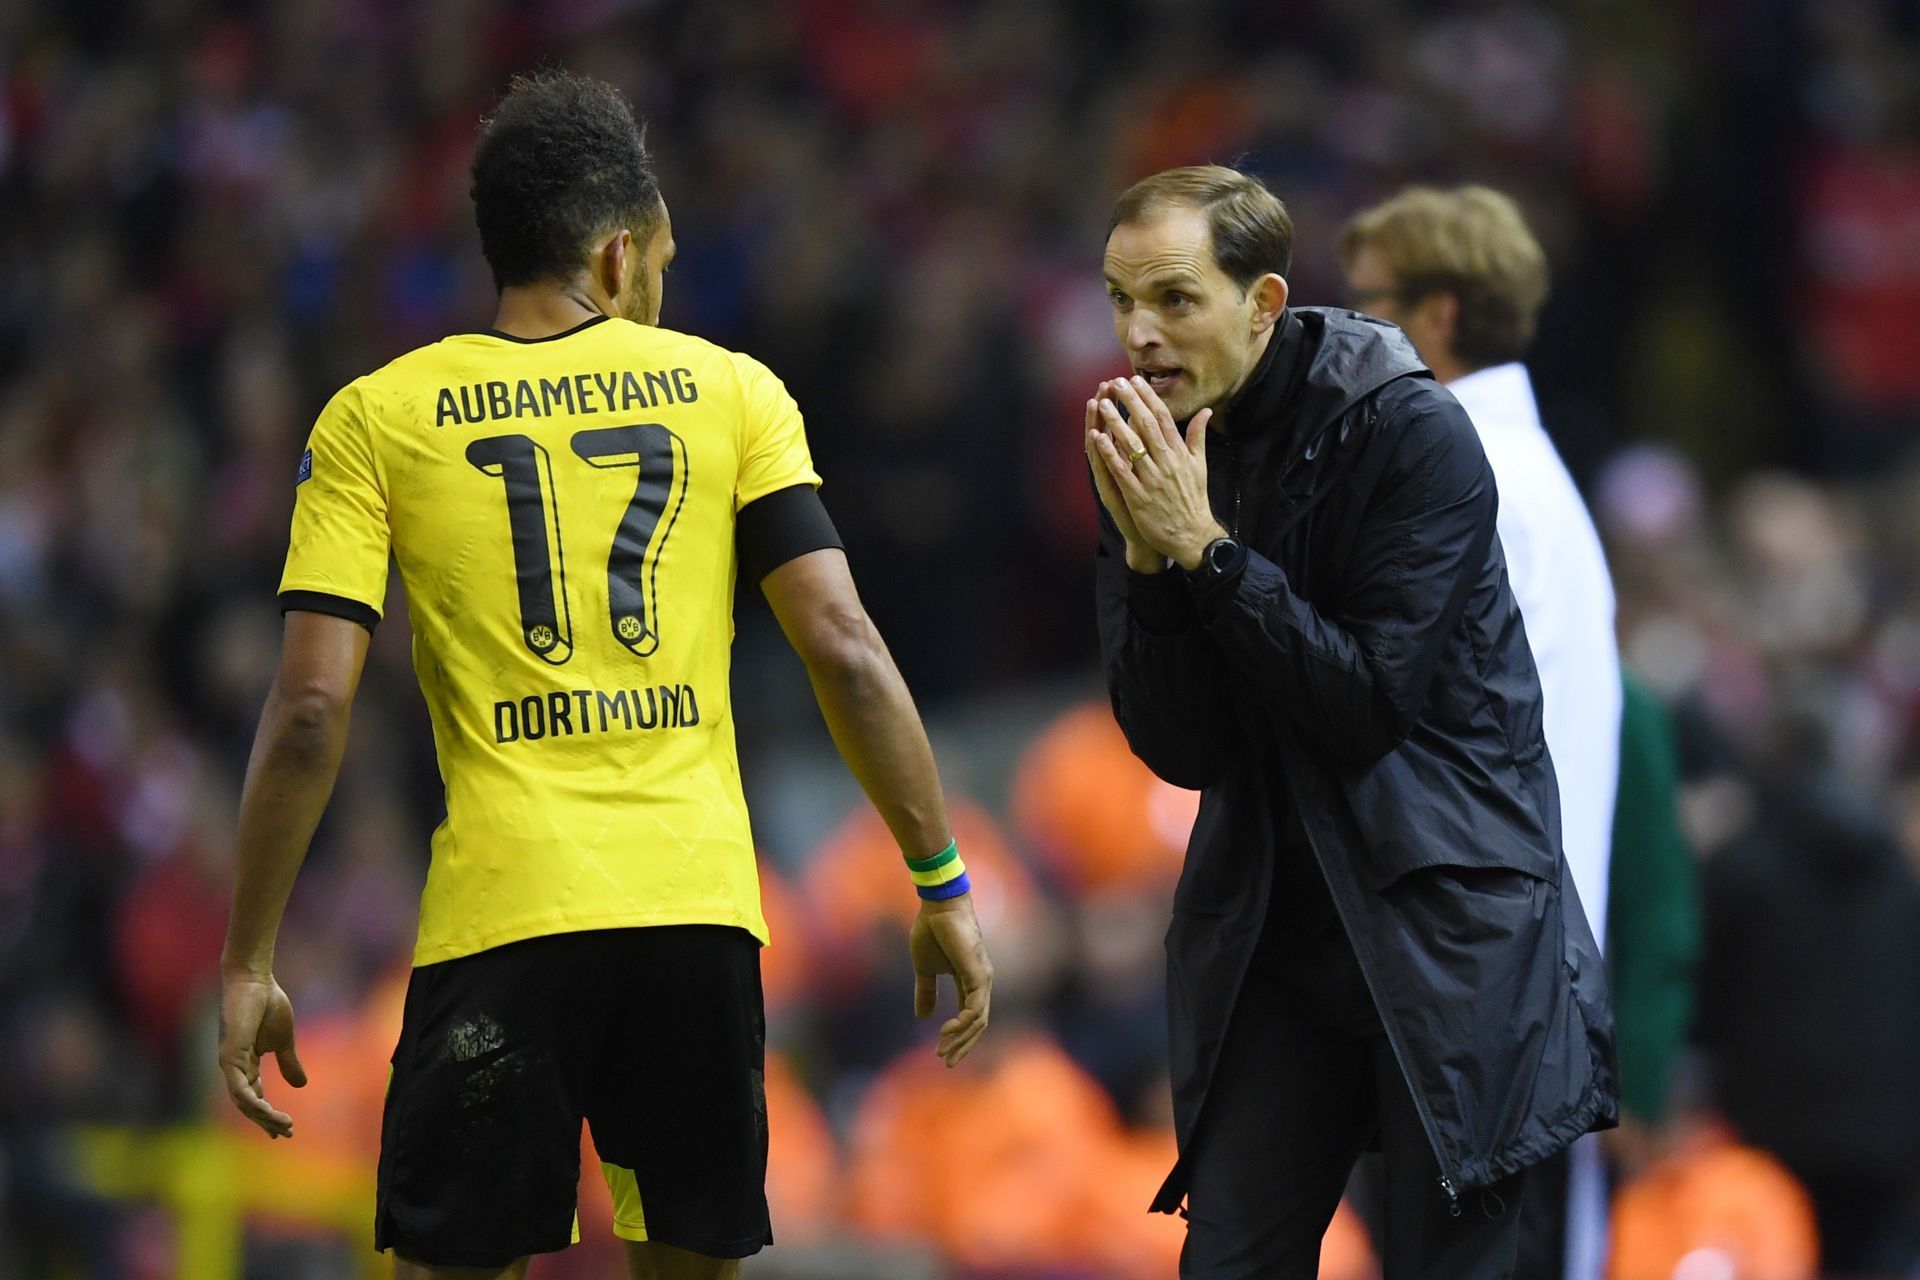 Aubameyang and Tuchel both worked together at Borussia Dortmund